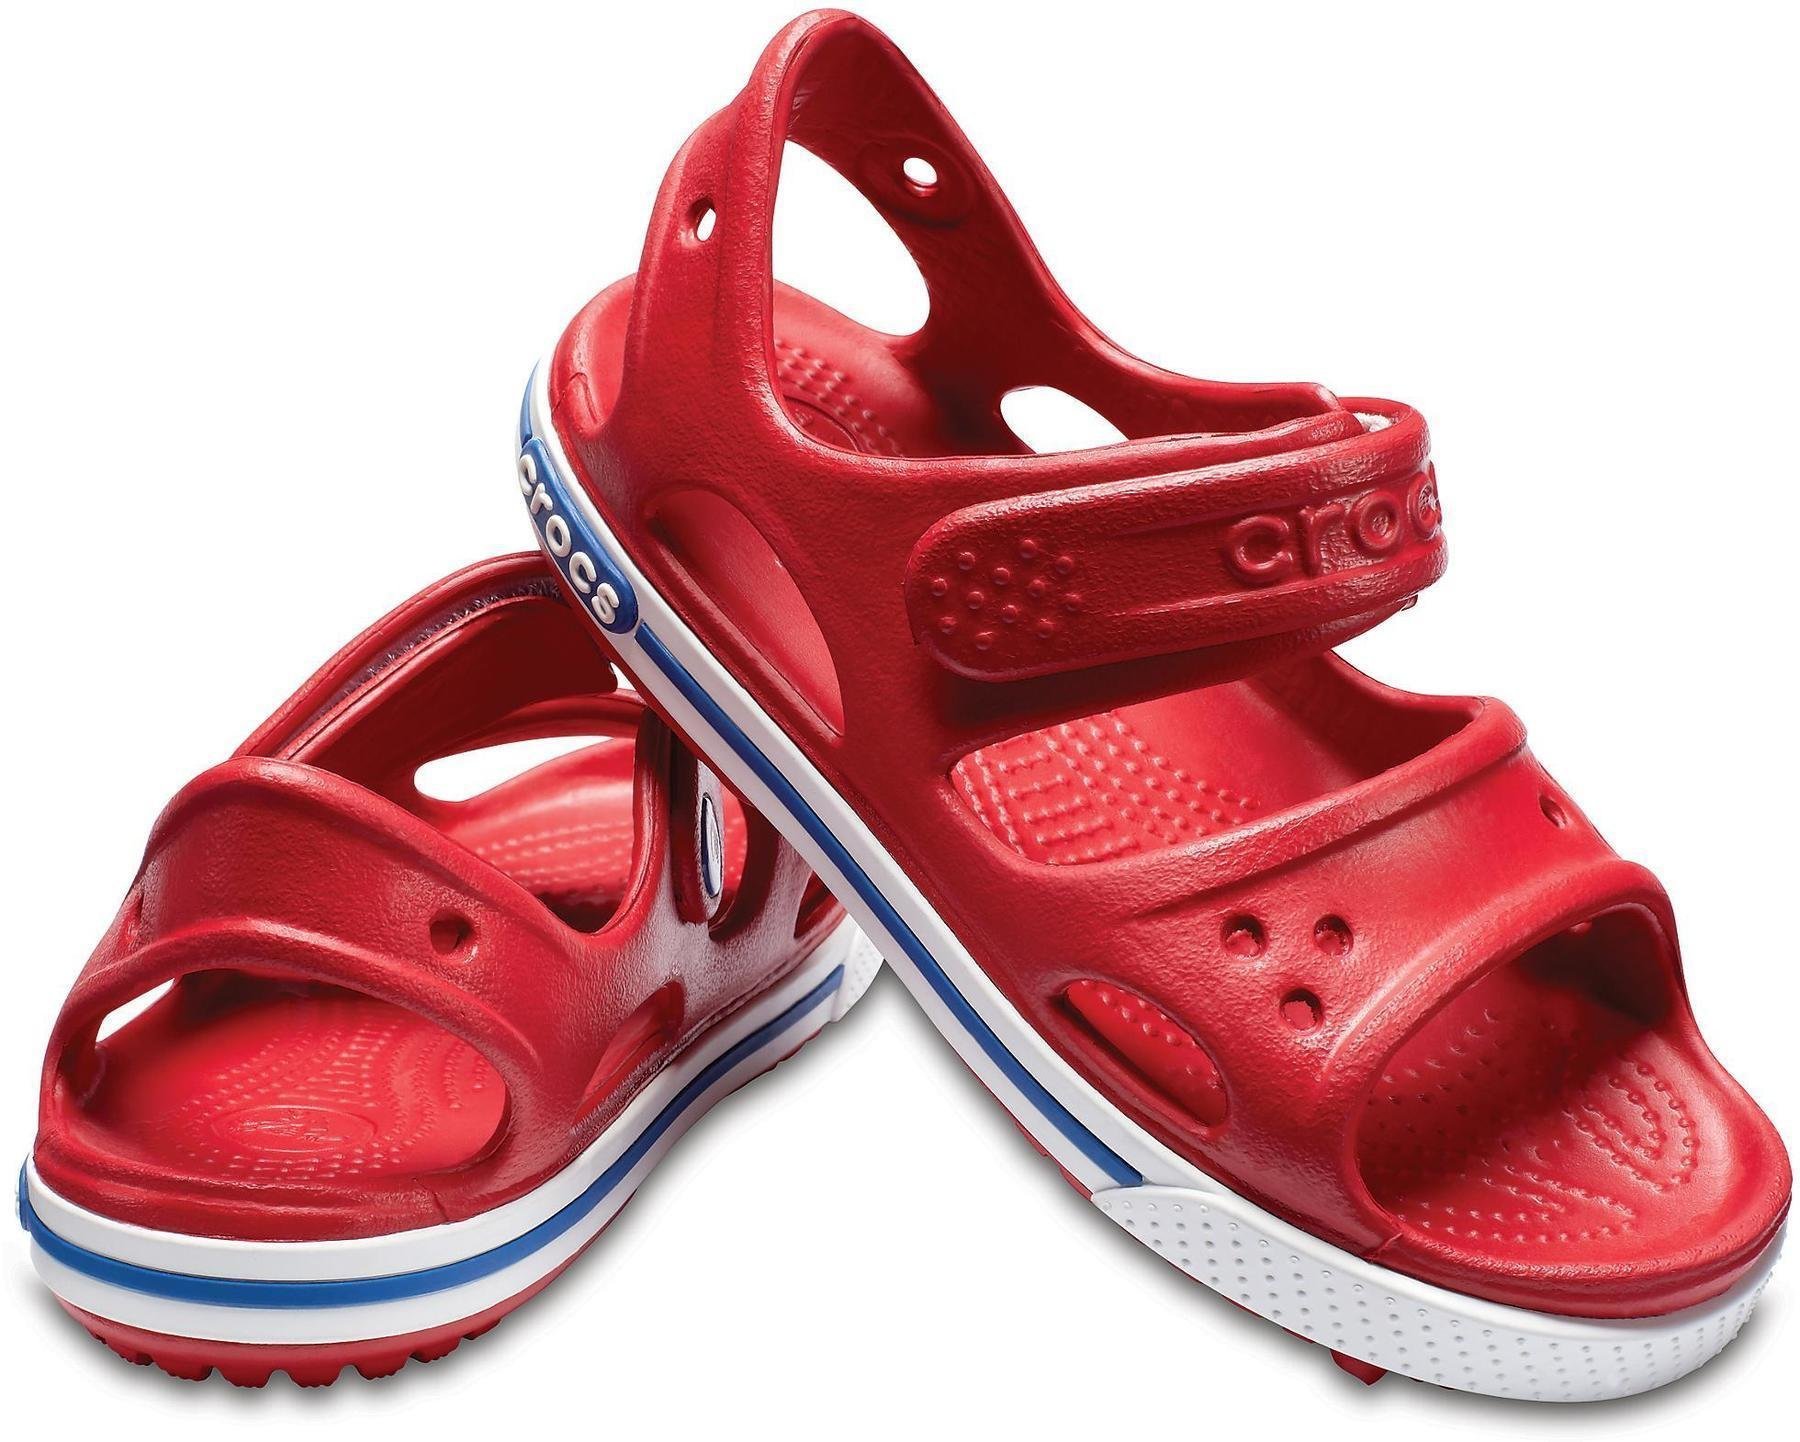 Chaussures de bateau enfant Crocs Preschool Crocband II Sandal Chaussures de bateau enfant